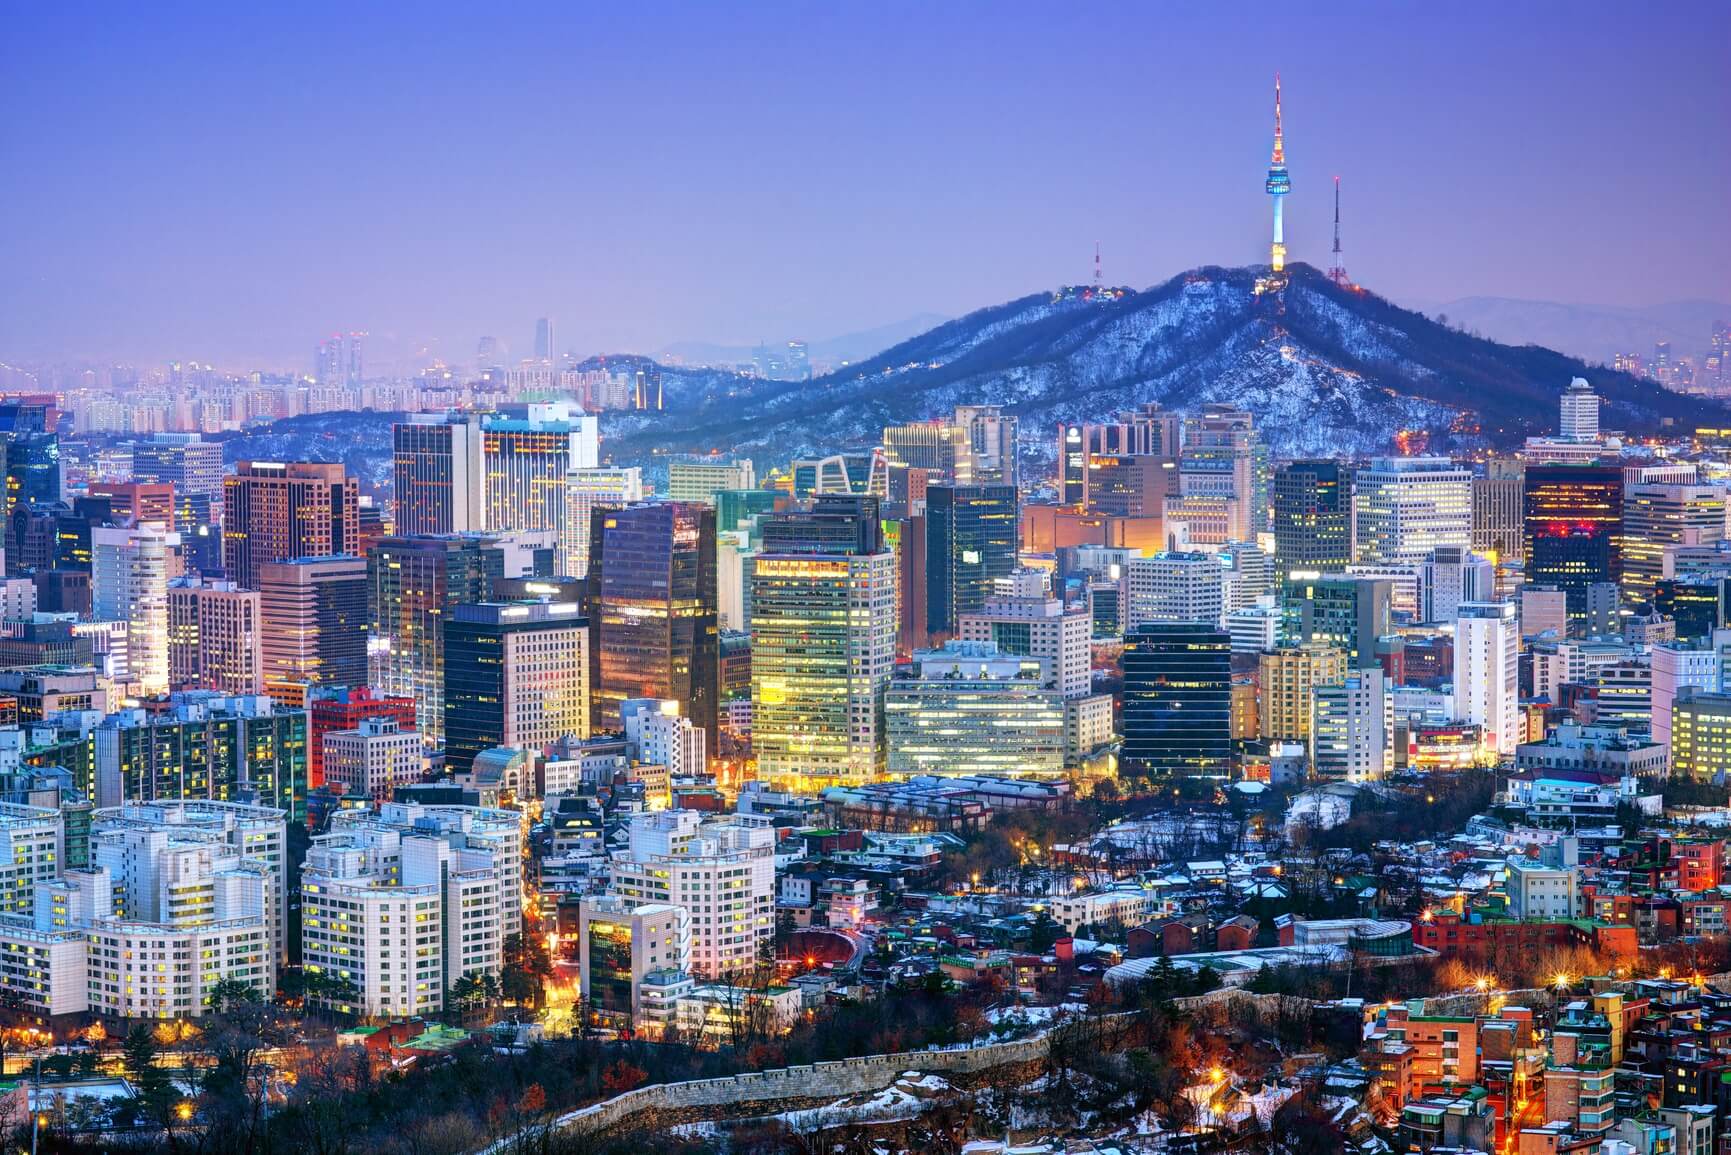 Flight deals from the Baltics to Seoul, South Korea | Secret Flying